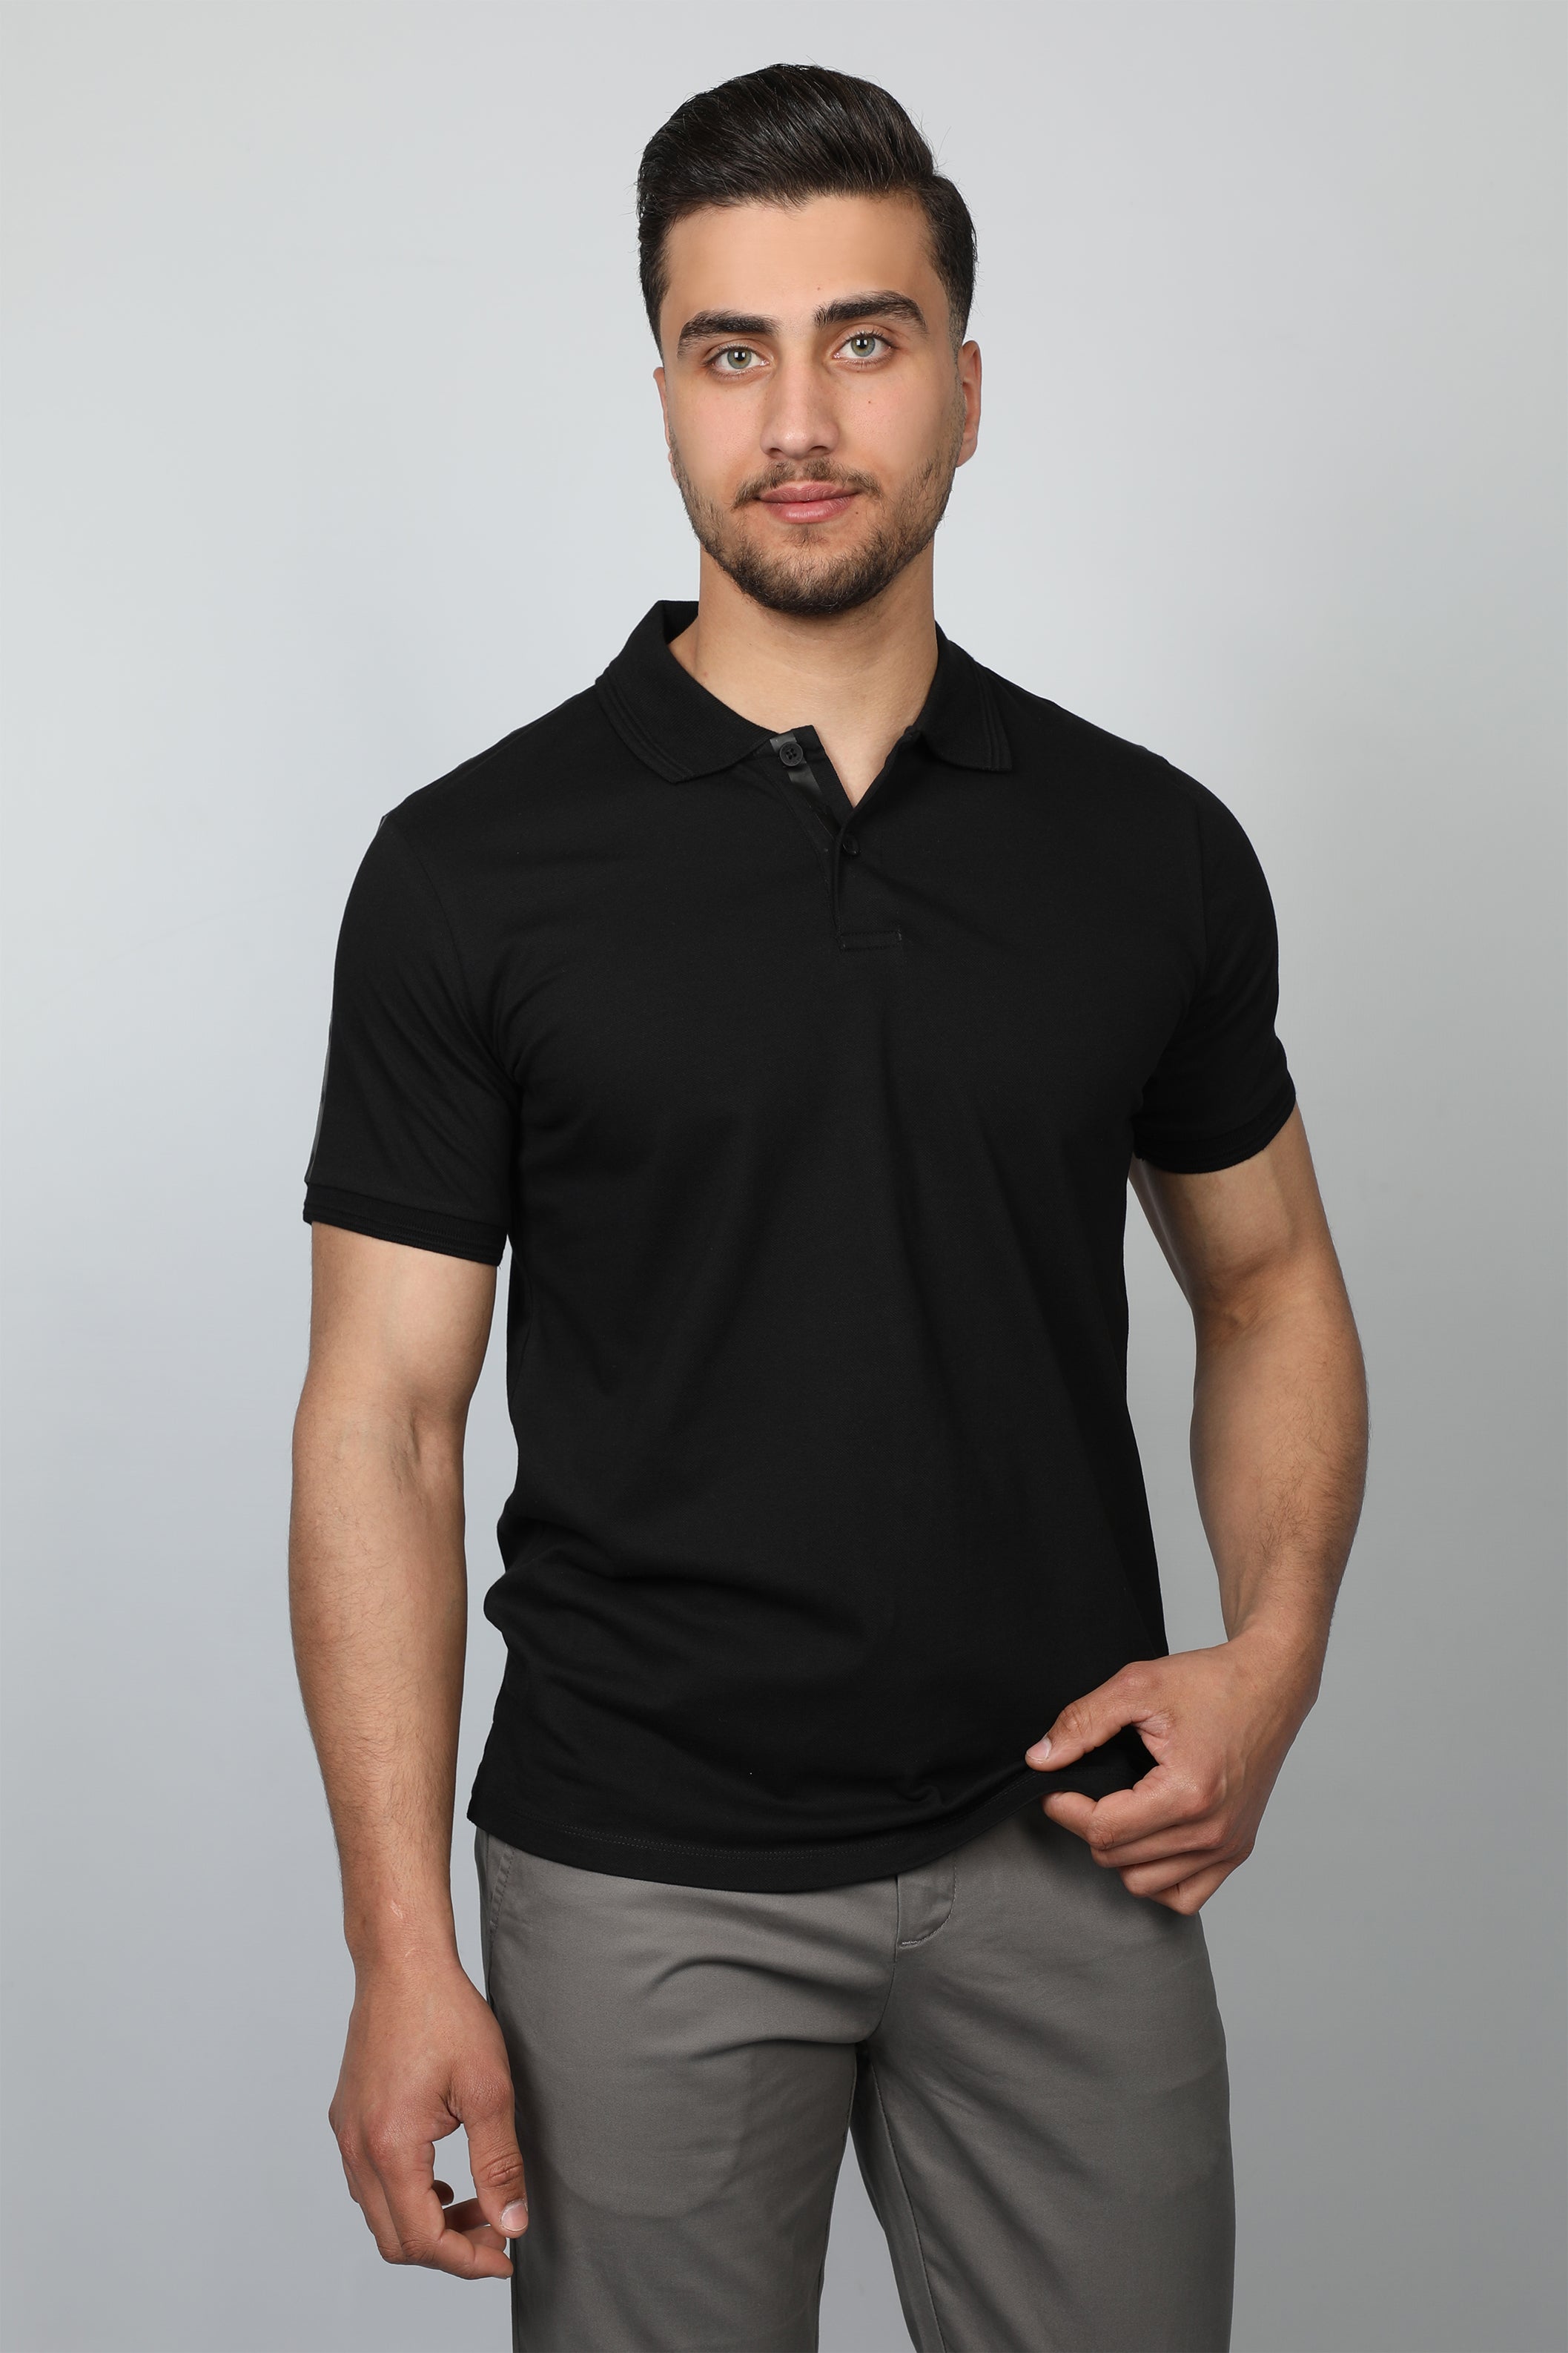 Black Polo With Shoulder Design